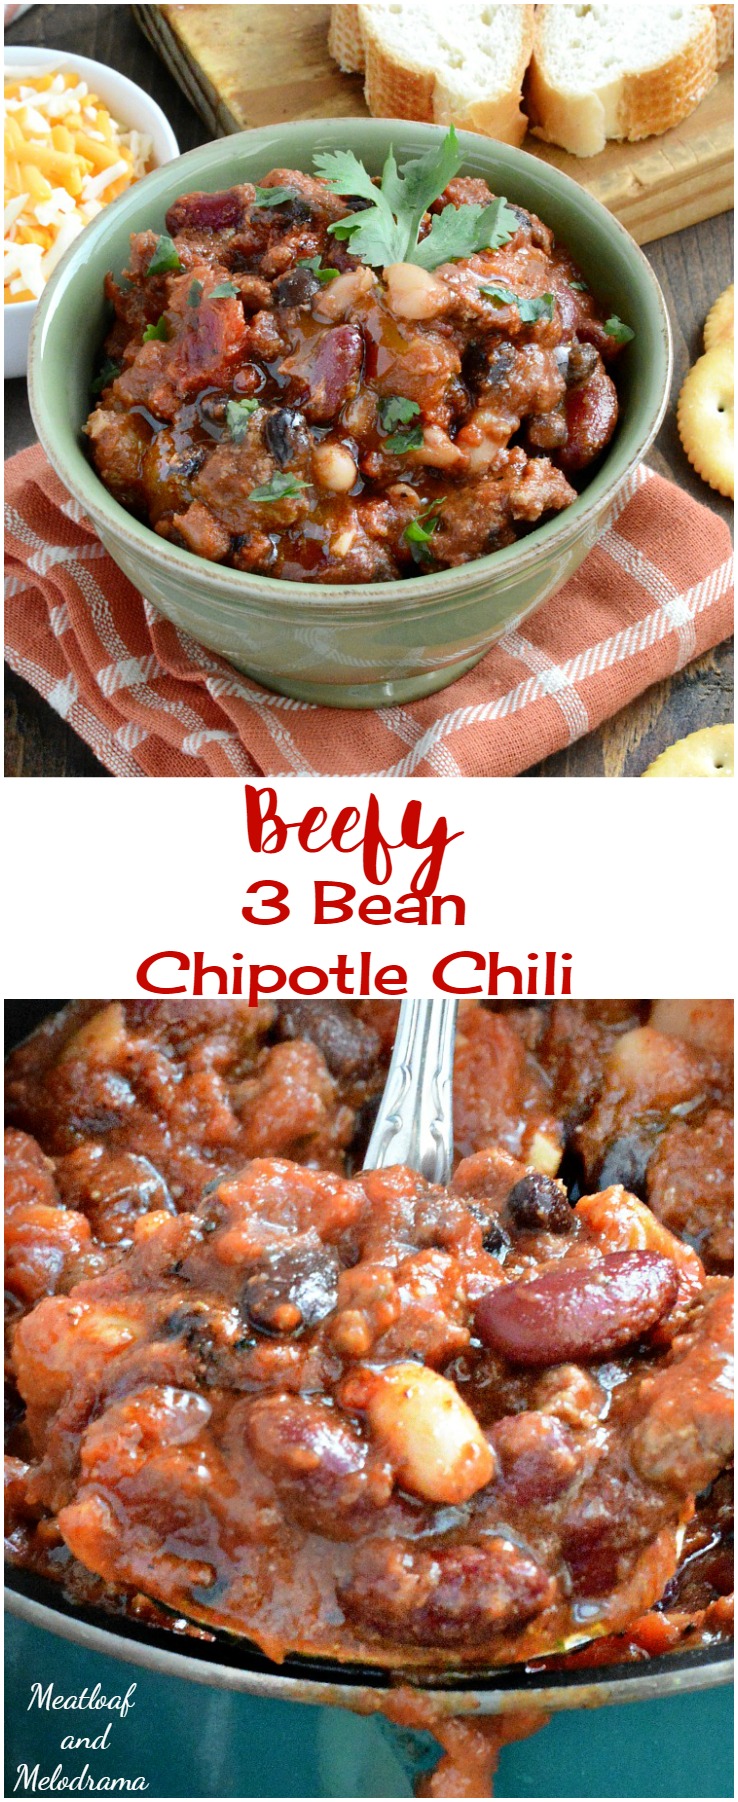 Beefy 3 Bean Chipotle Chili Recipe